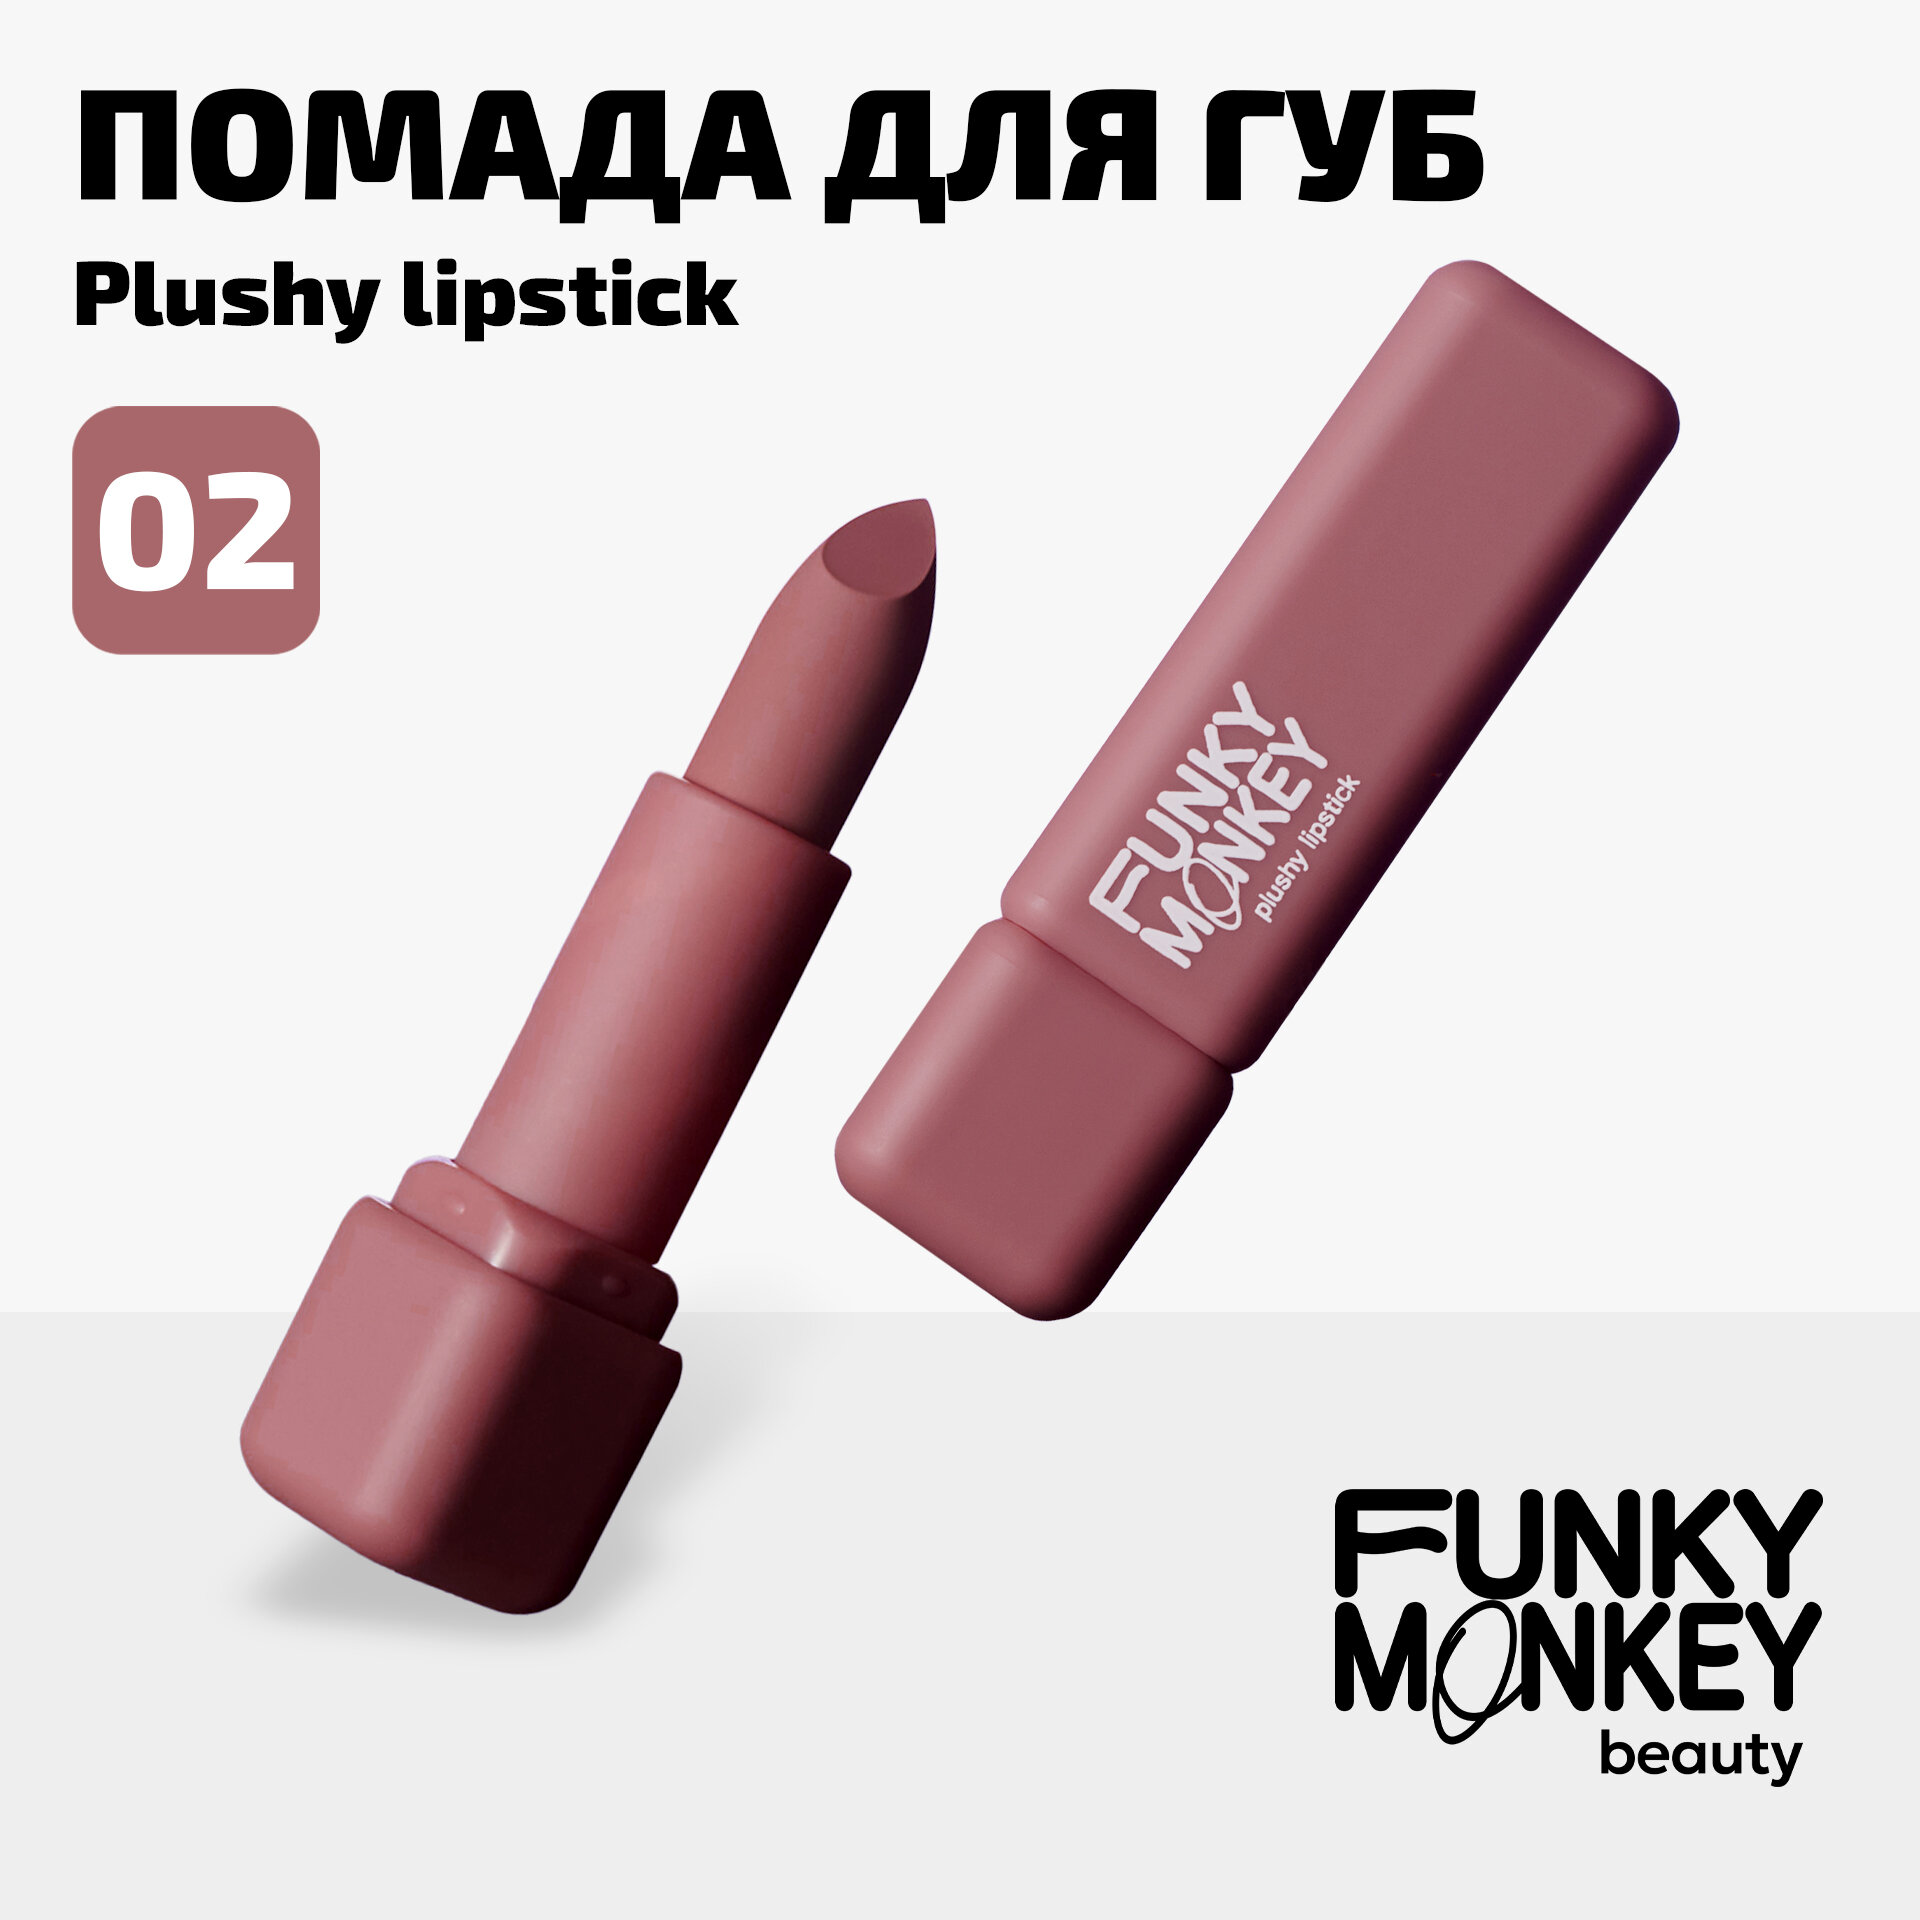 Funky Monkey Помада для губ плюшевая Plushy lipstick тон 02